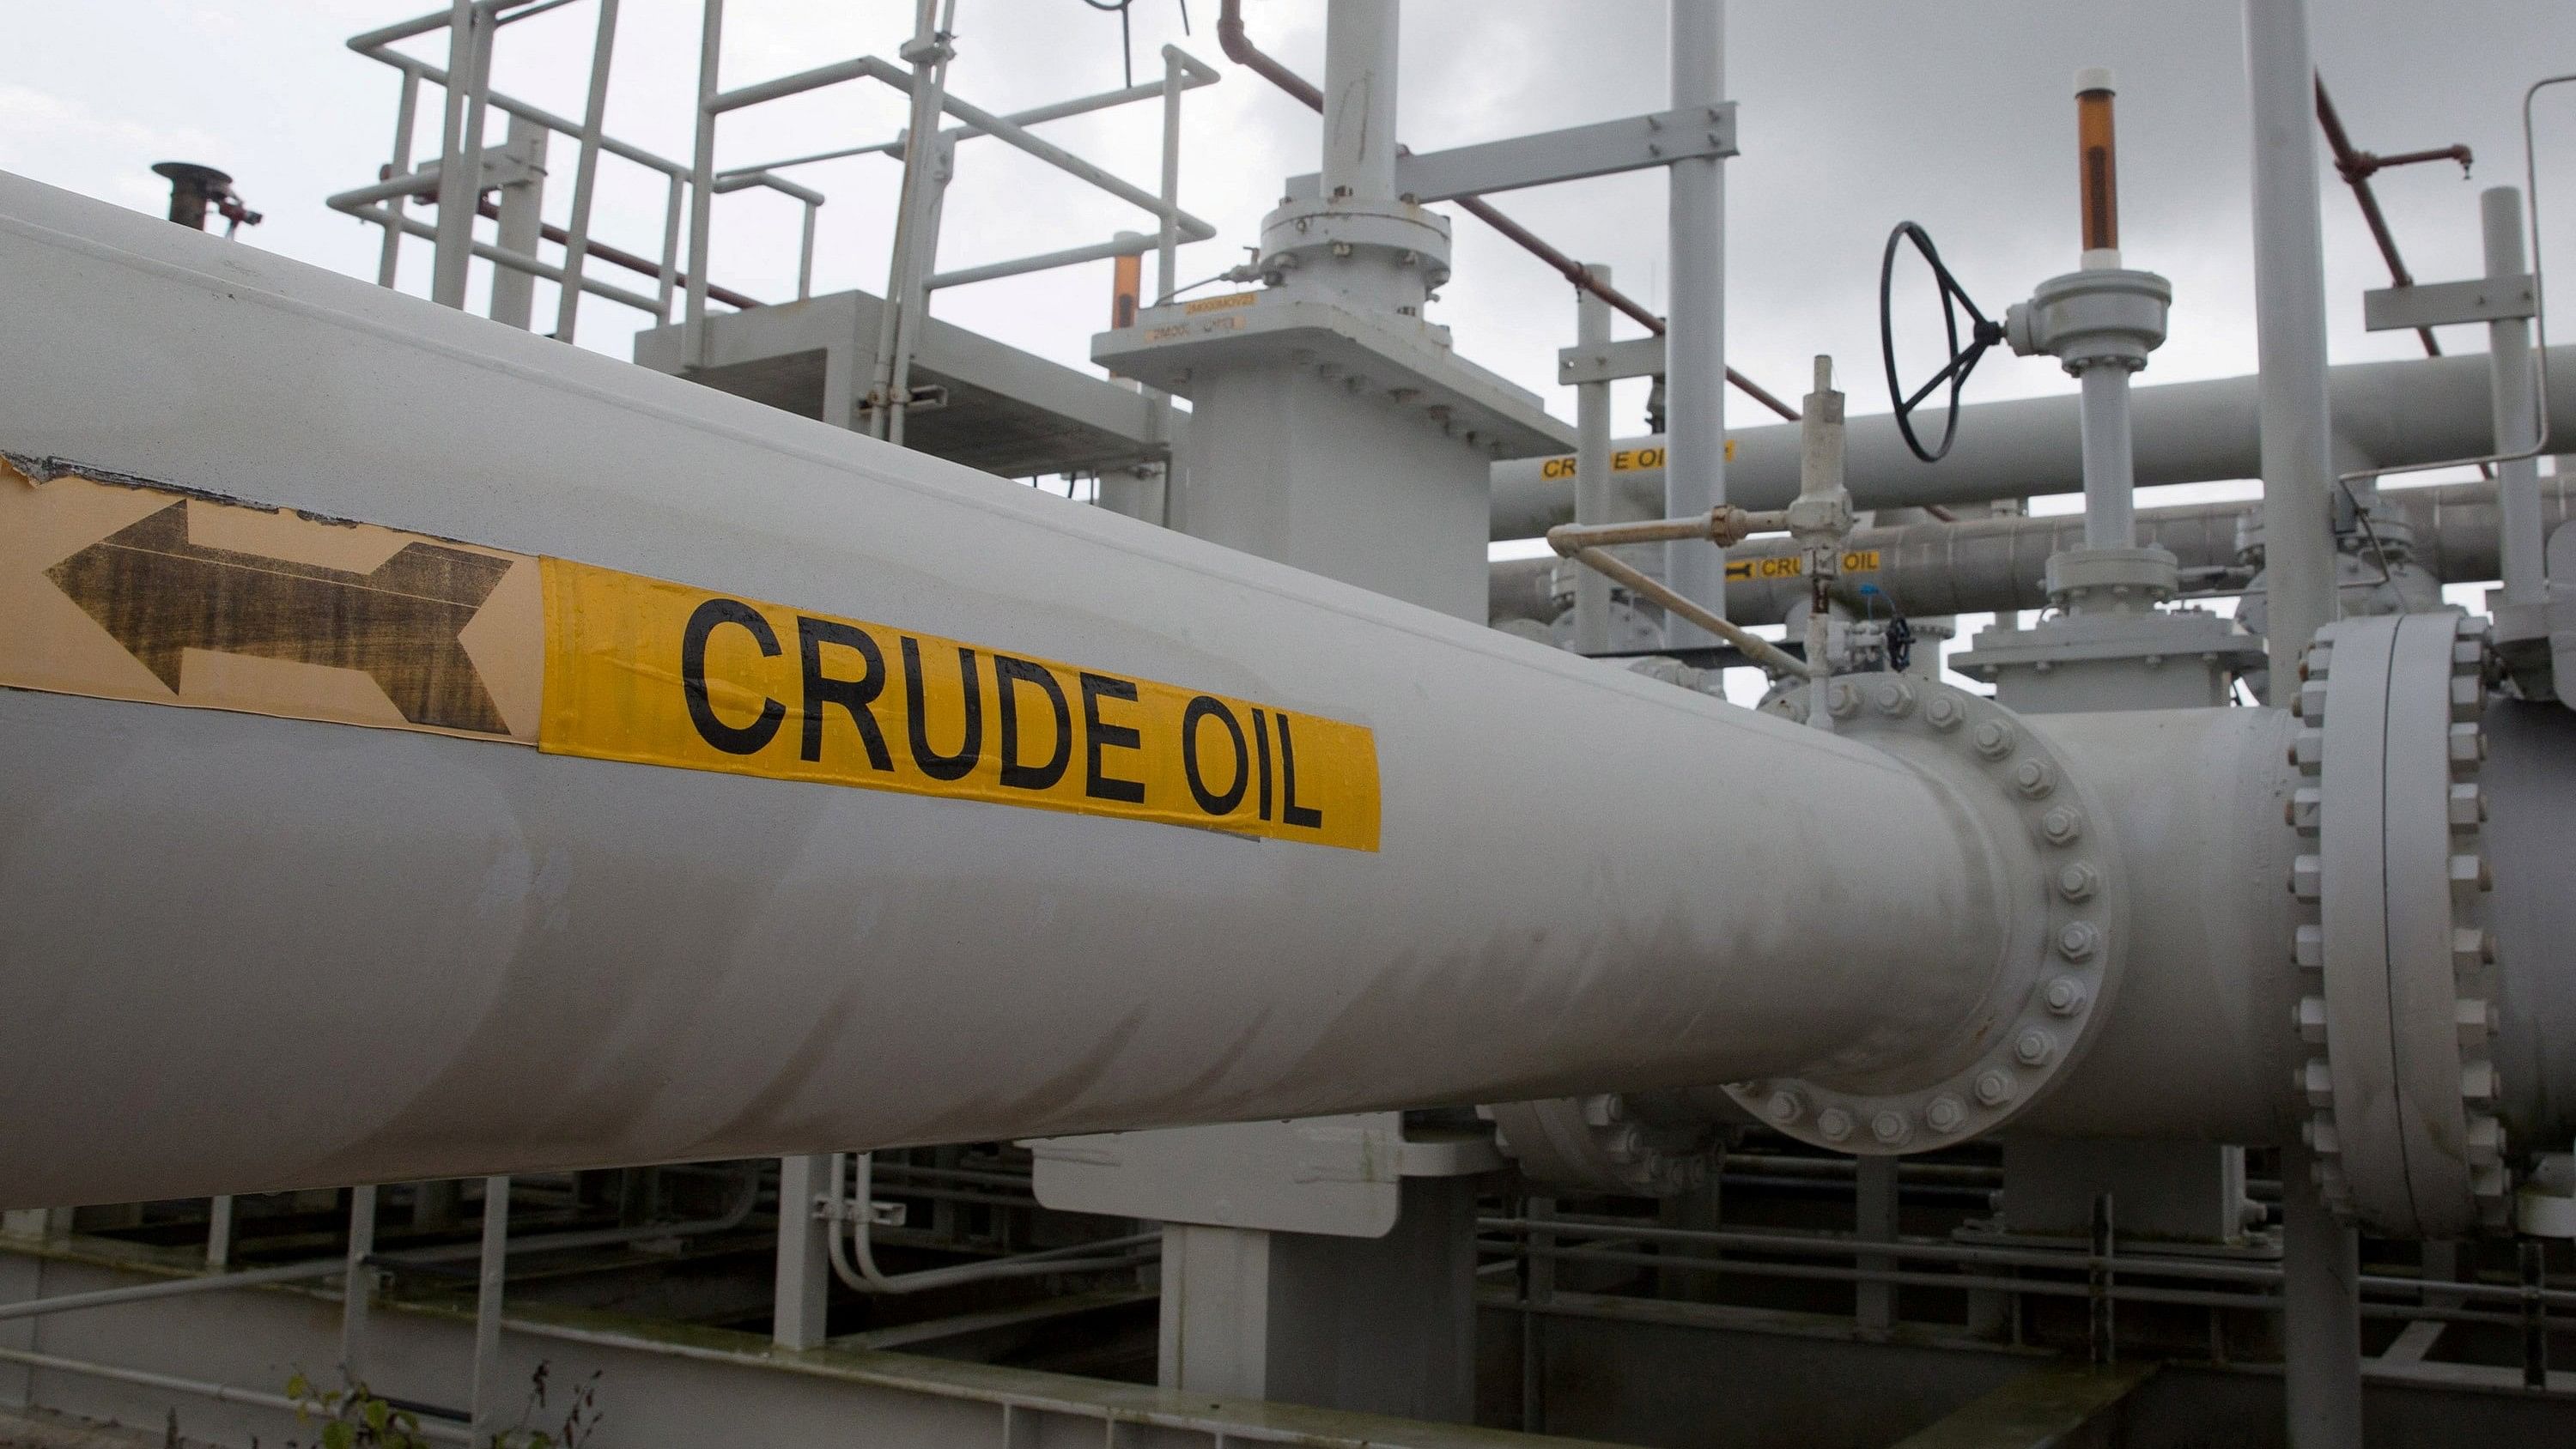 <div class="paragraphs"><p>Representative image showing a&nbsp; crude oil pipeline.</p></div>